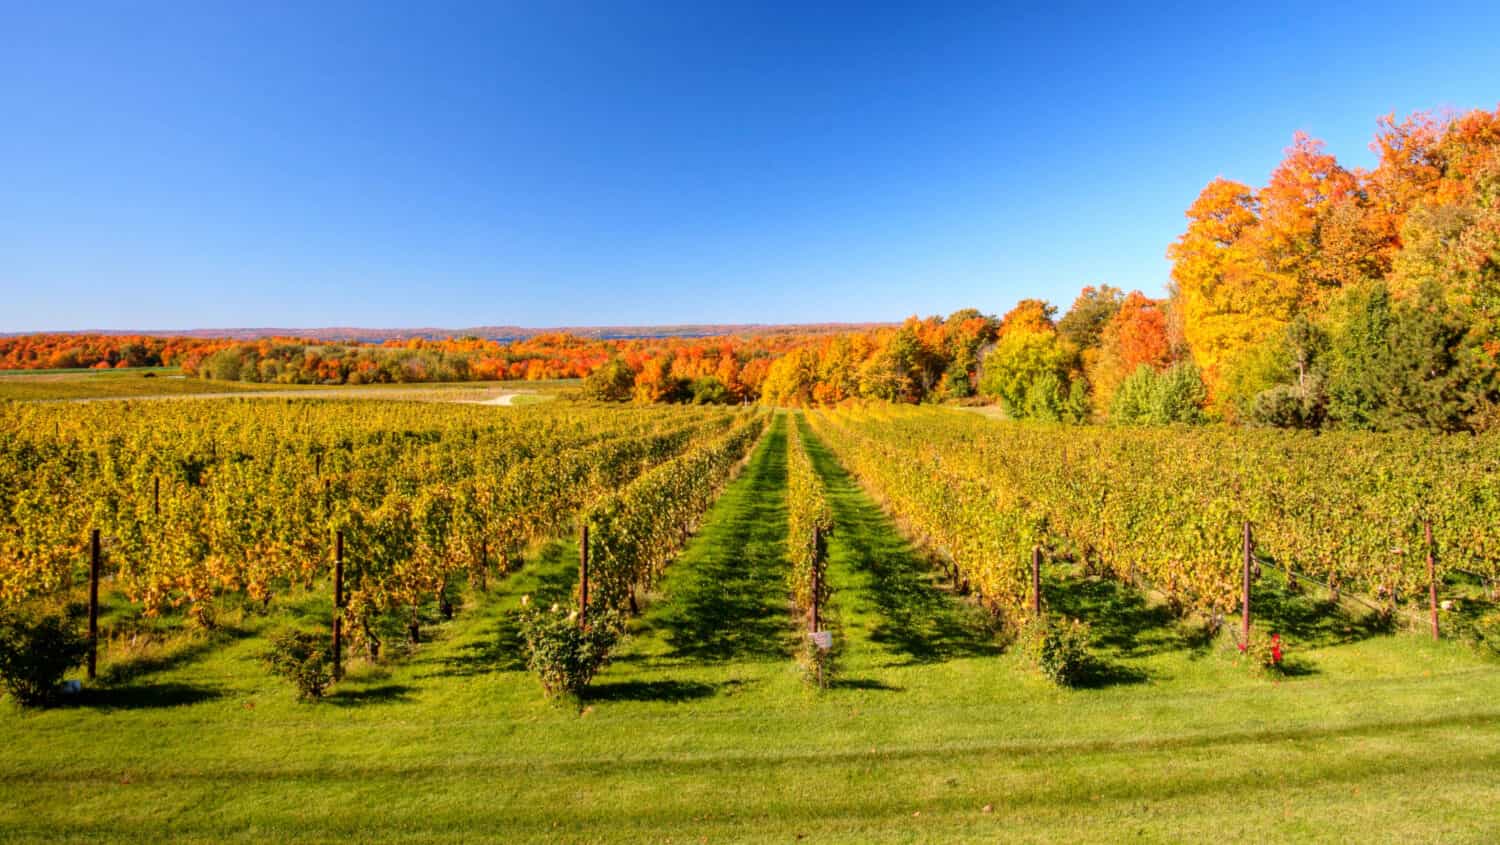 Traverse City, Michigan boasts nearly 40 wineries